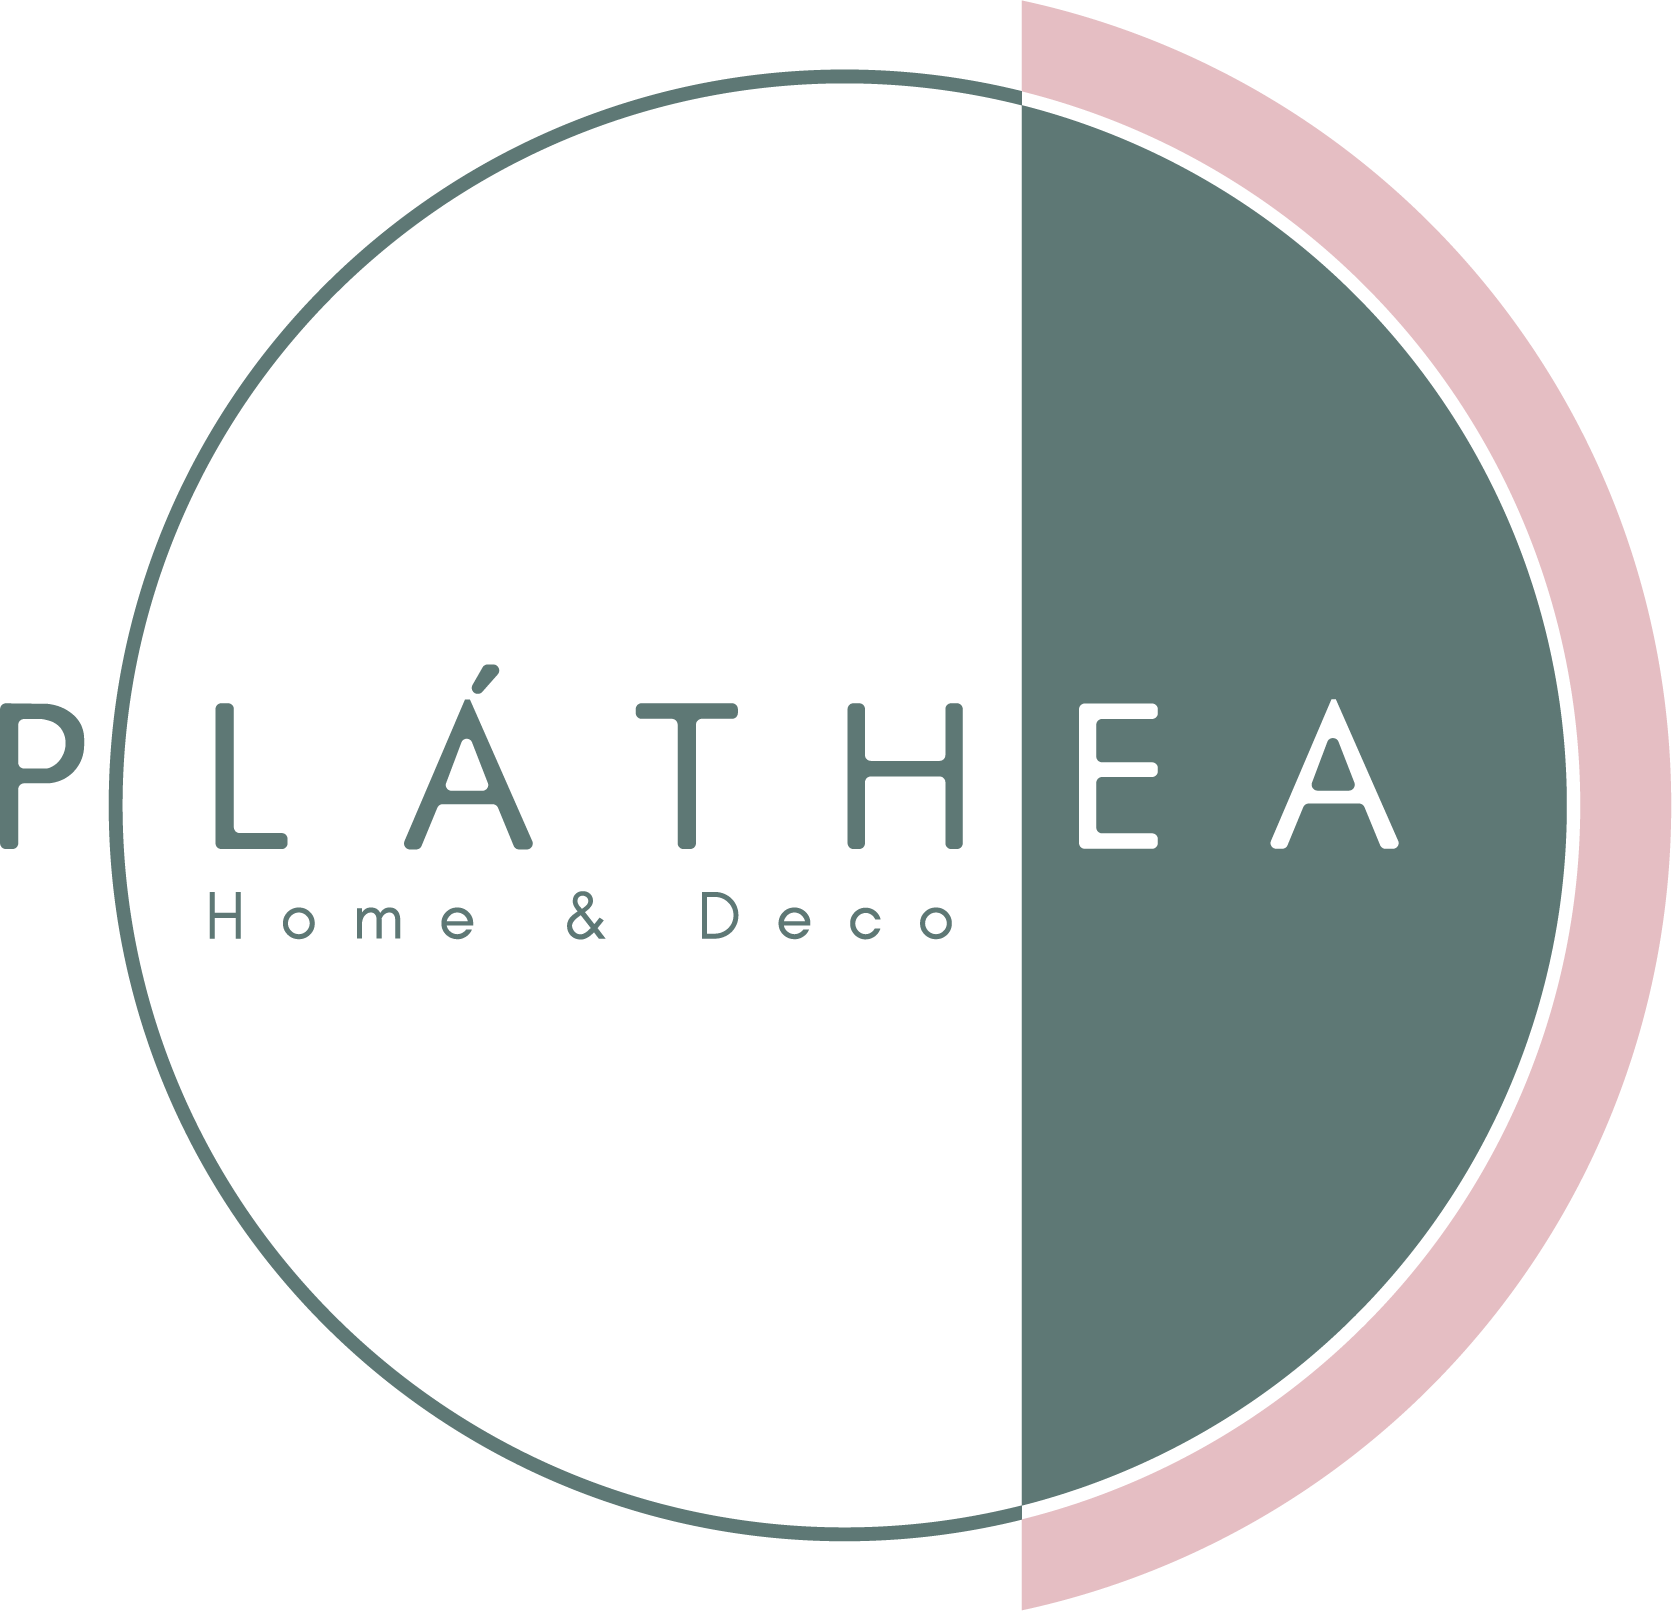 Plathea